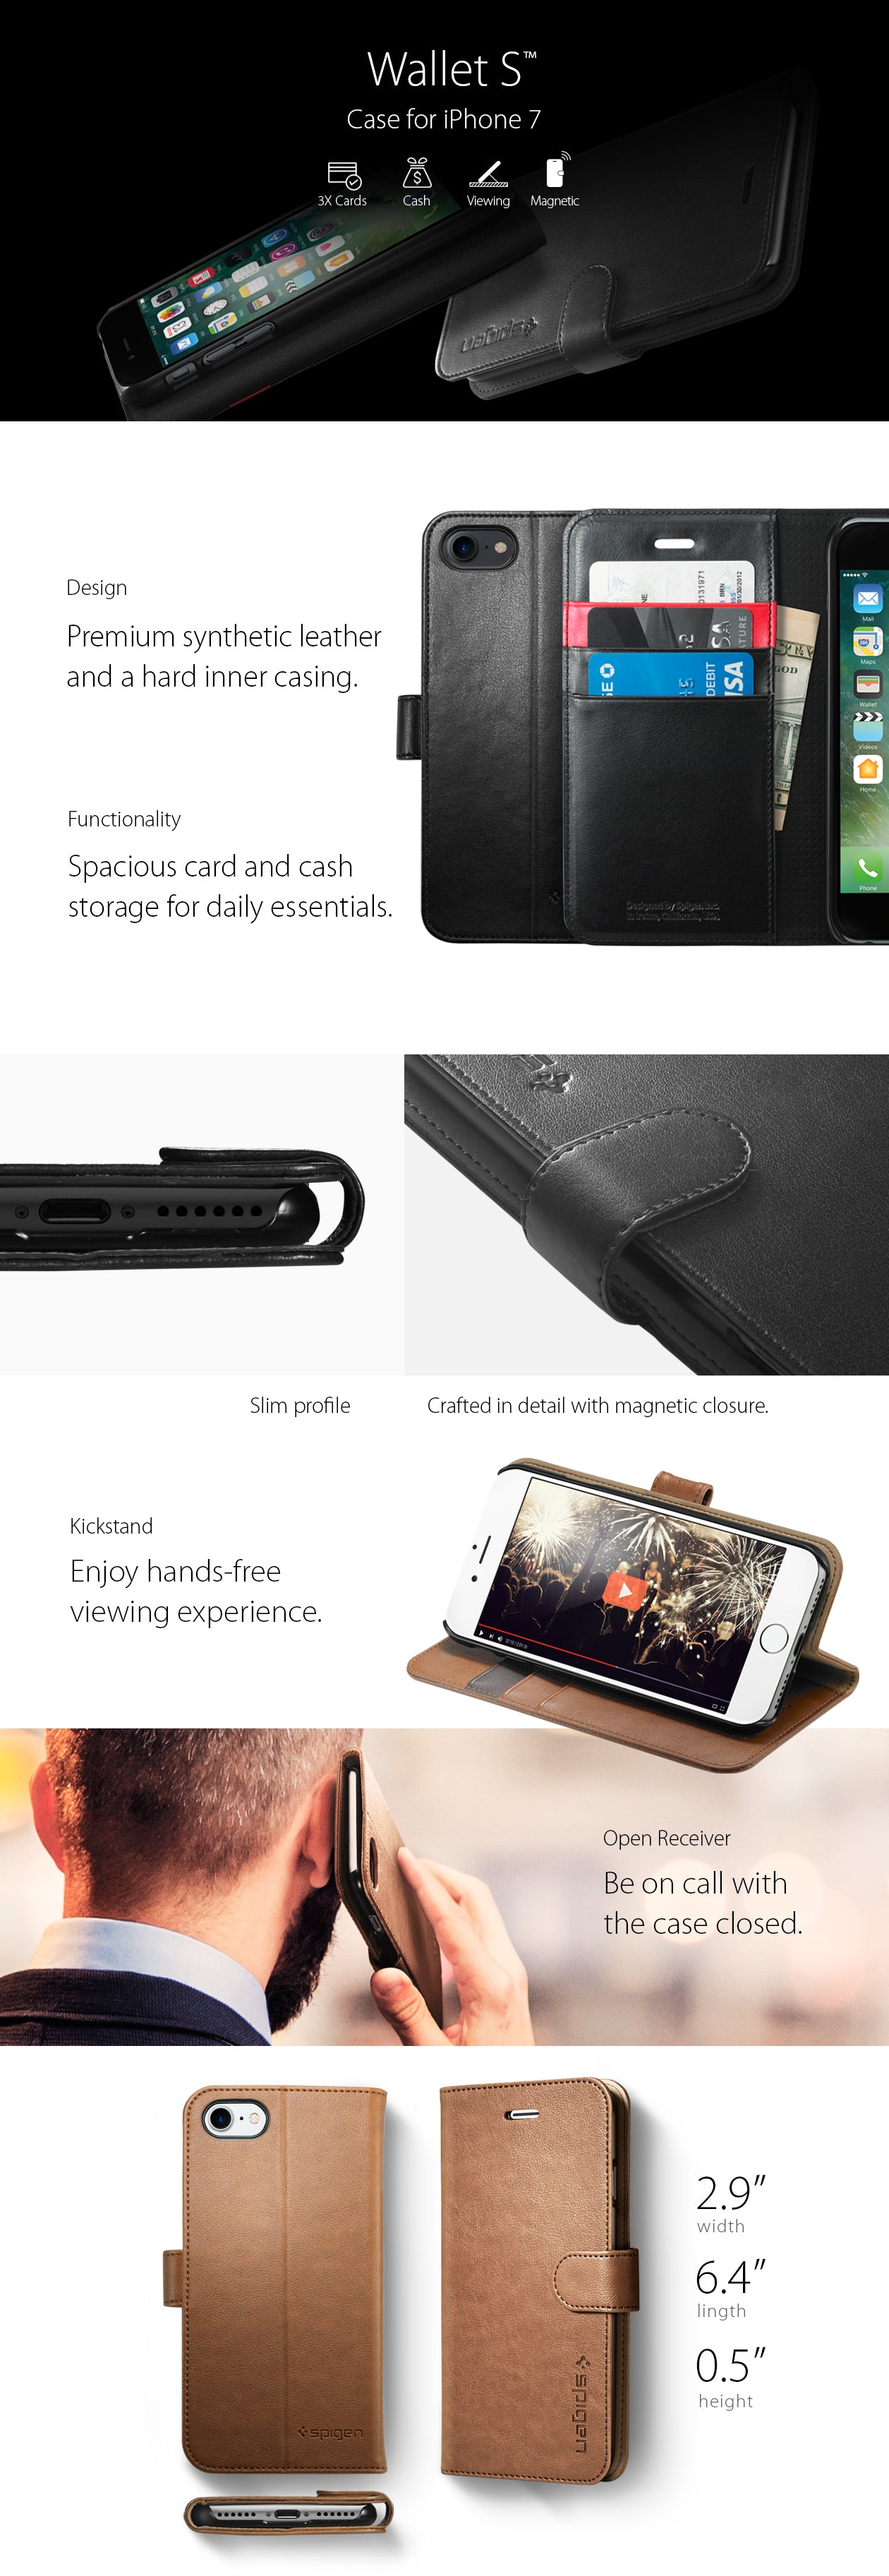 iPhone 7 Case Wallet S | Spigen Inc.